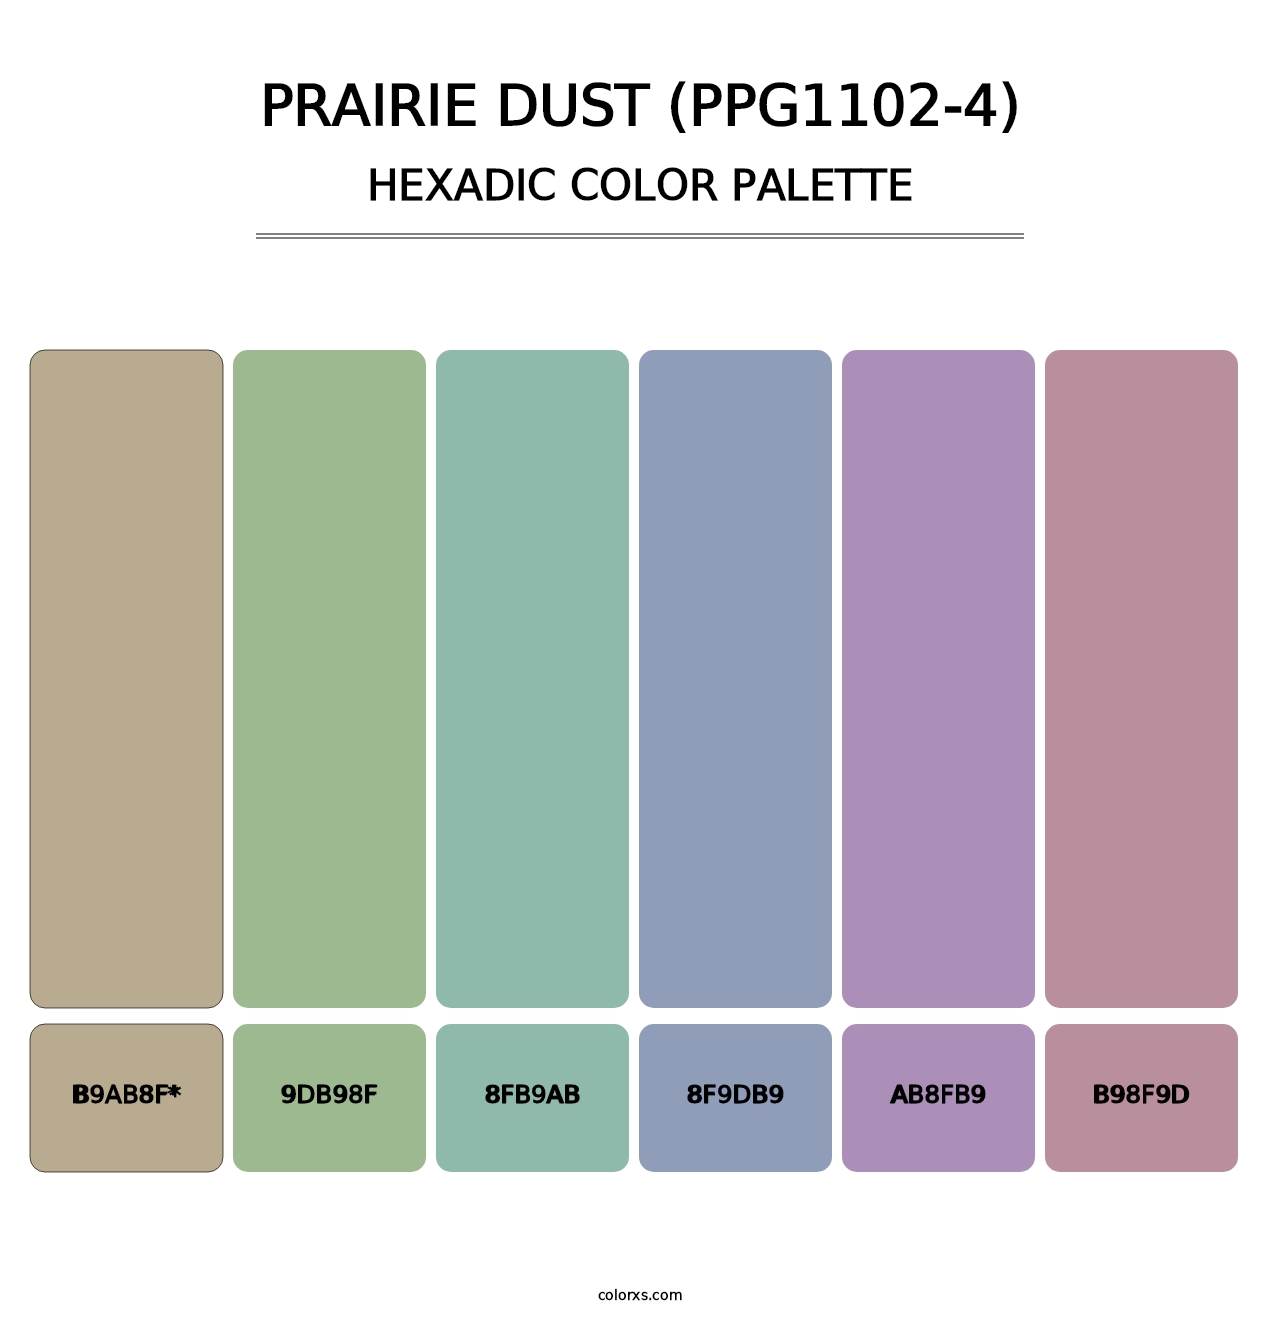 Prairie Dust (PPG1102-4) - Hexadic Color Palette